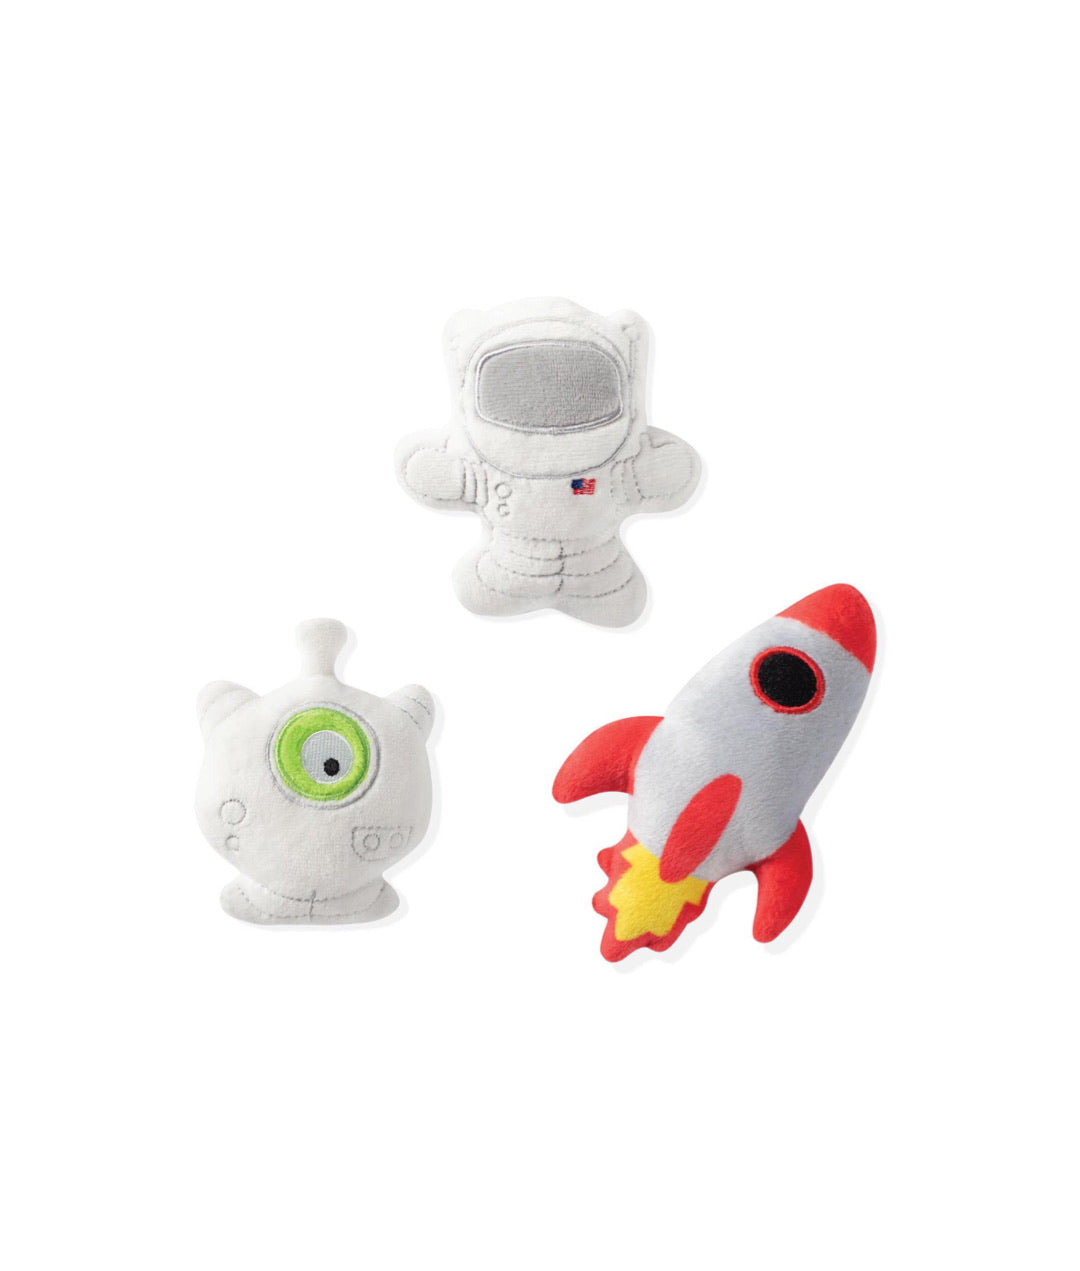 Fringe Studio Toy Box Mini Space Squeaky Plush Toy